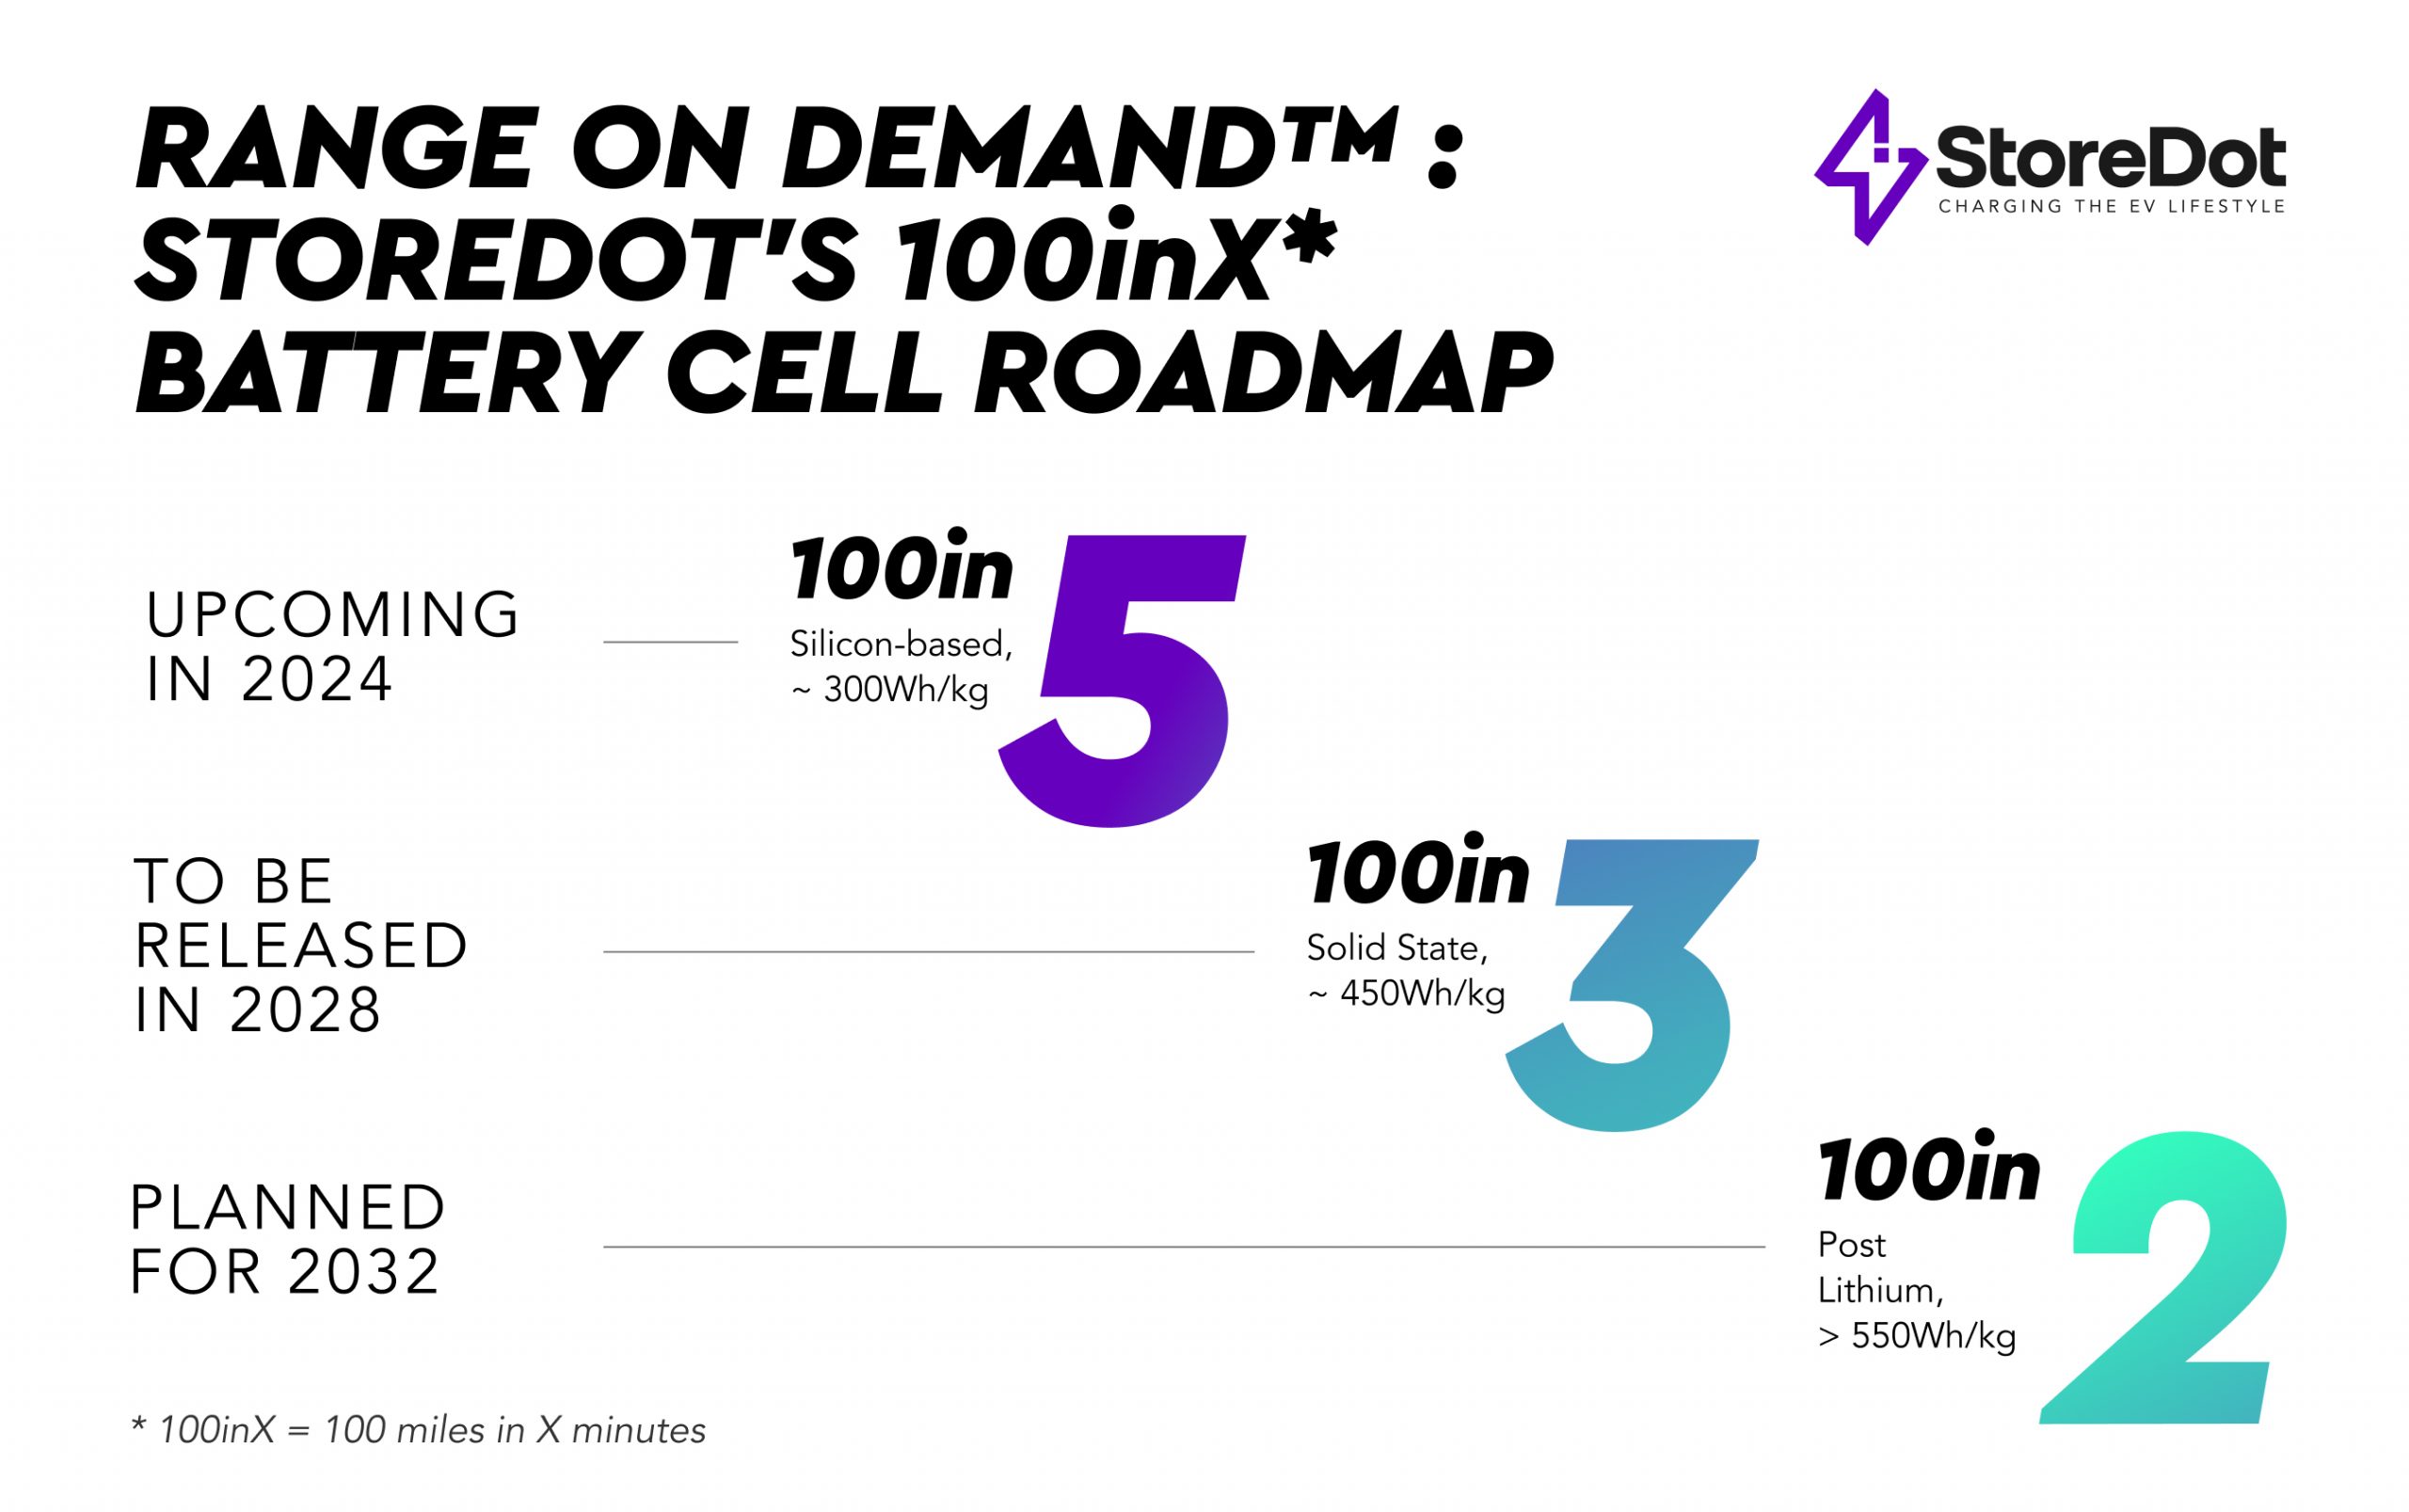 StoreDot's 100inX battery cell roadmap for Cision